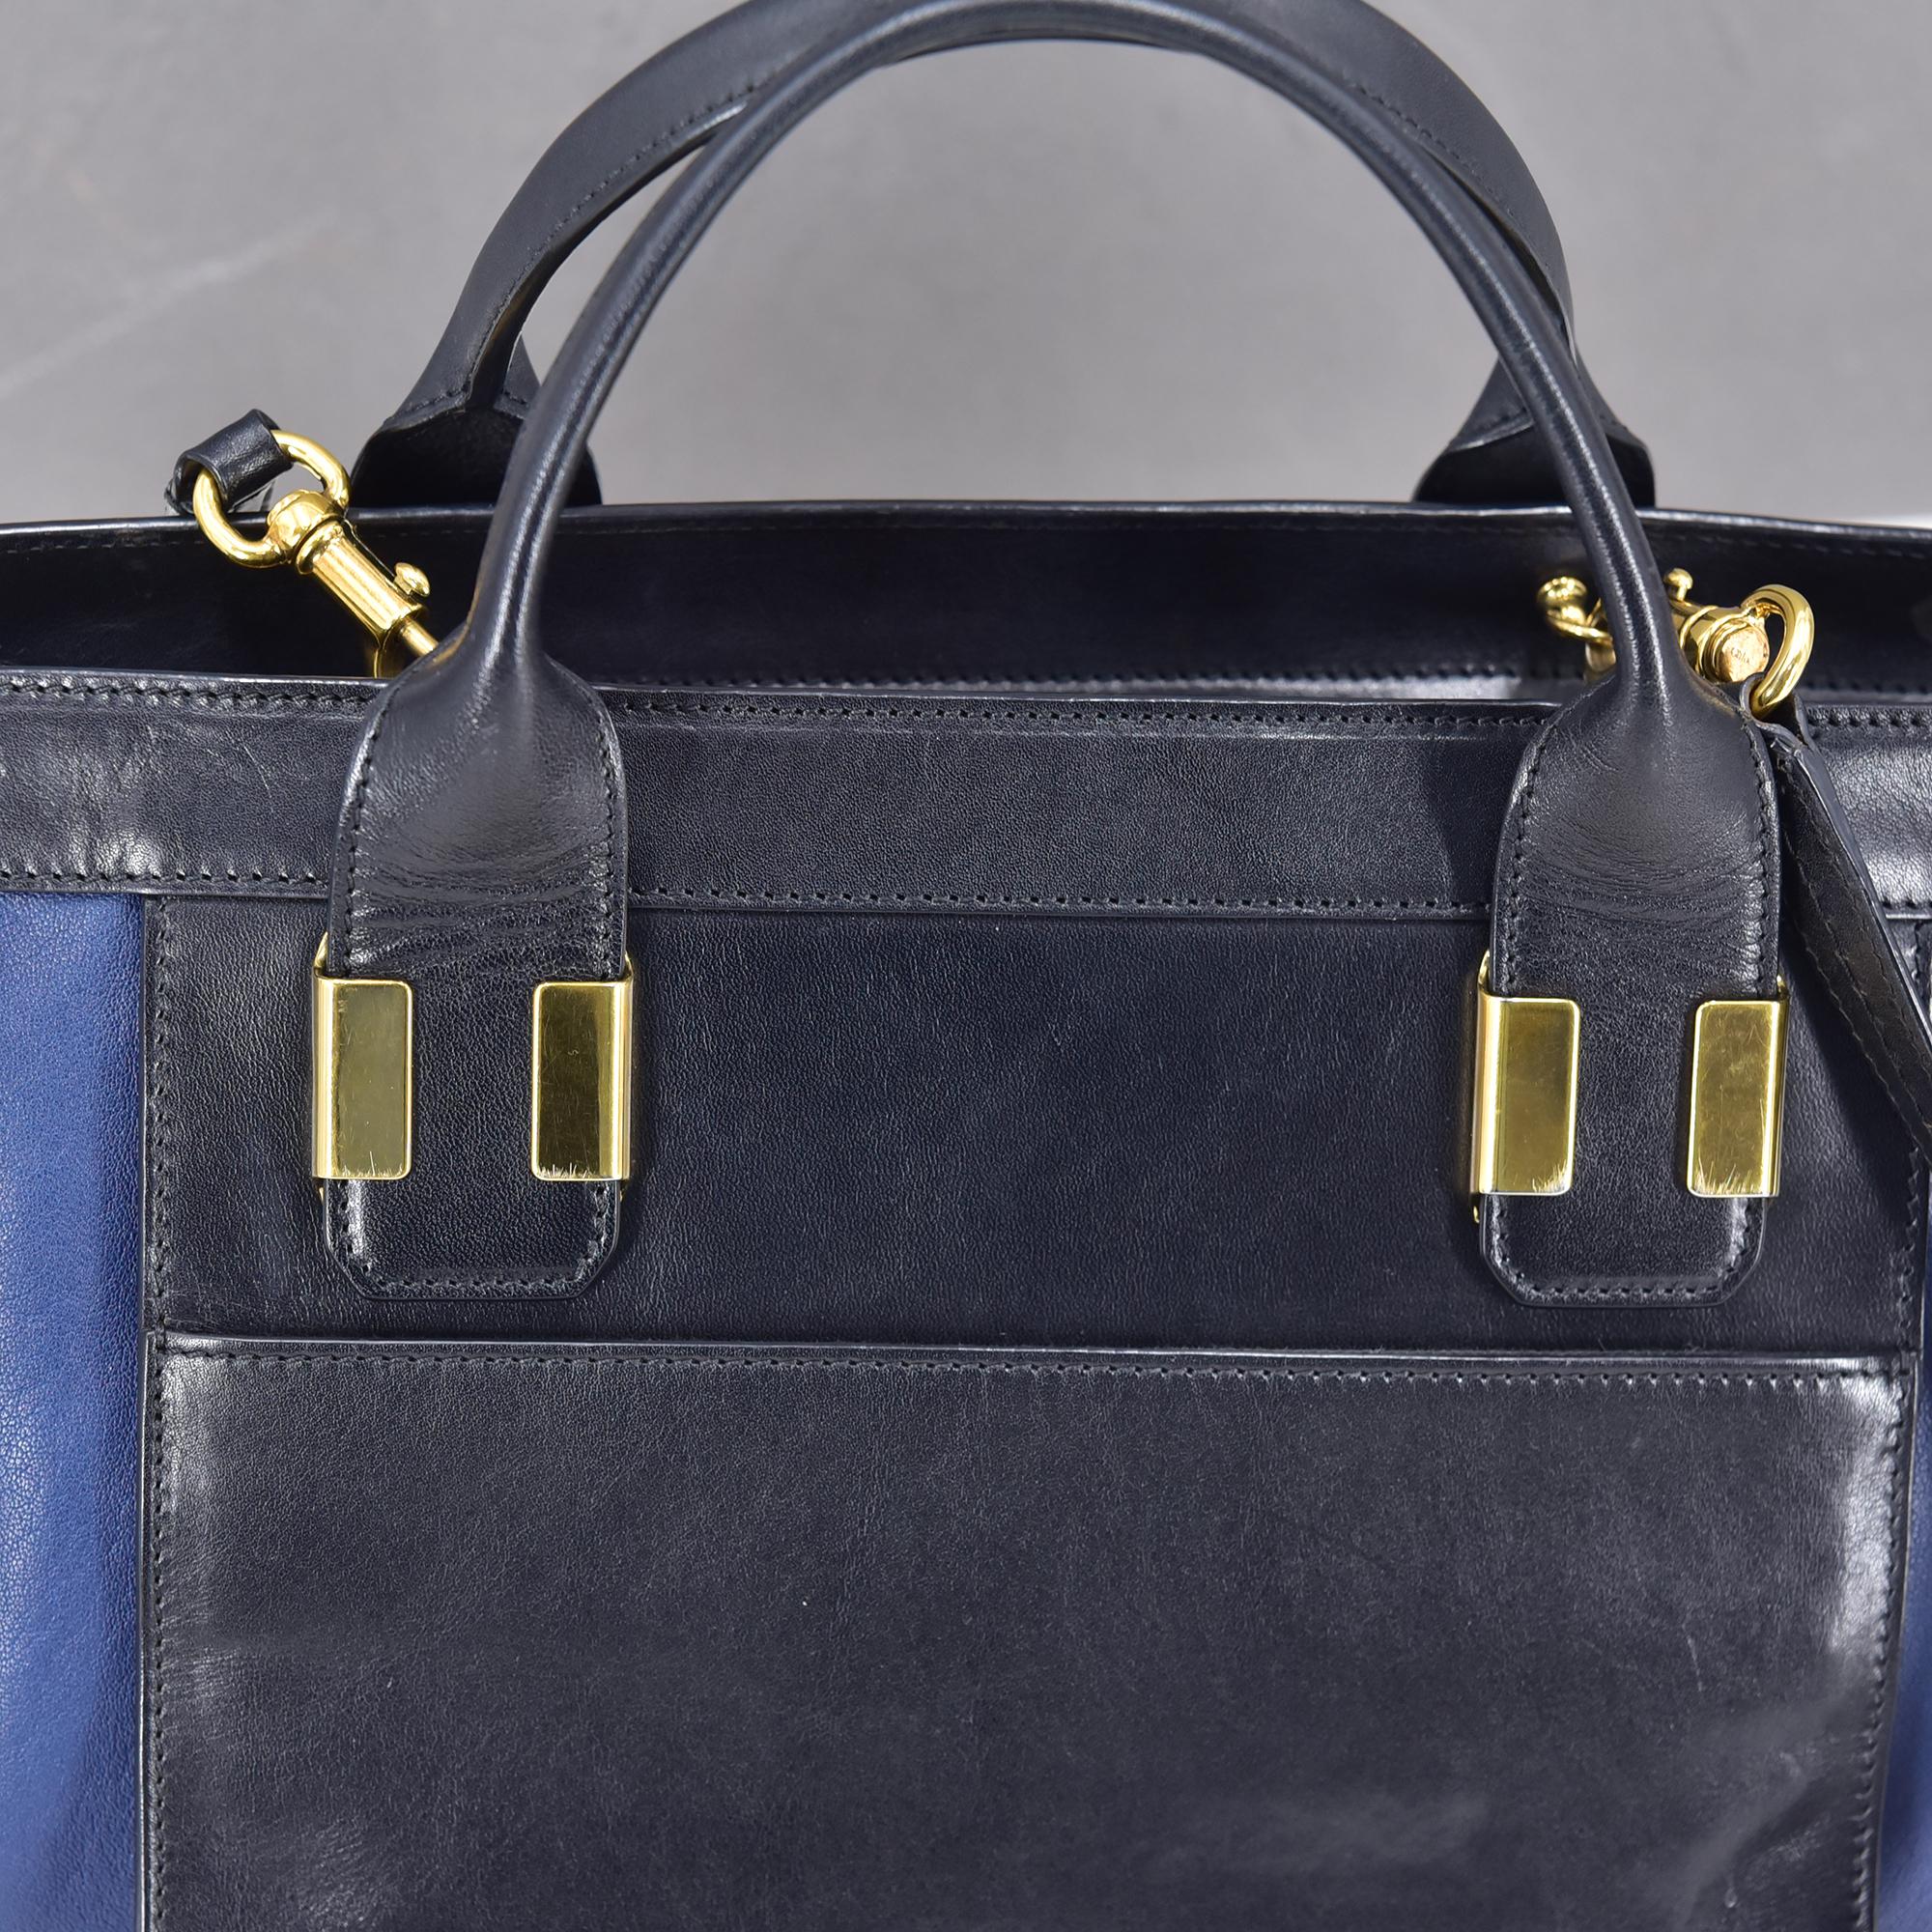 Alice Leather Handbag